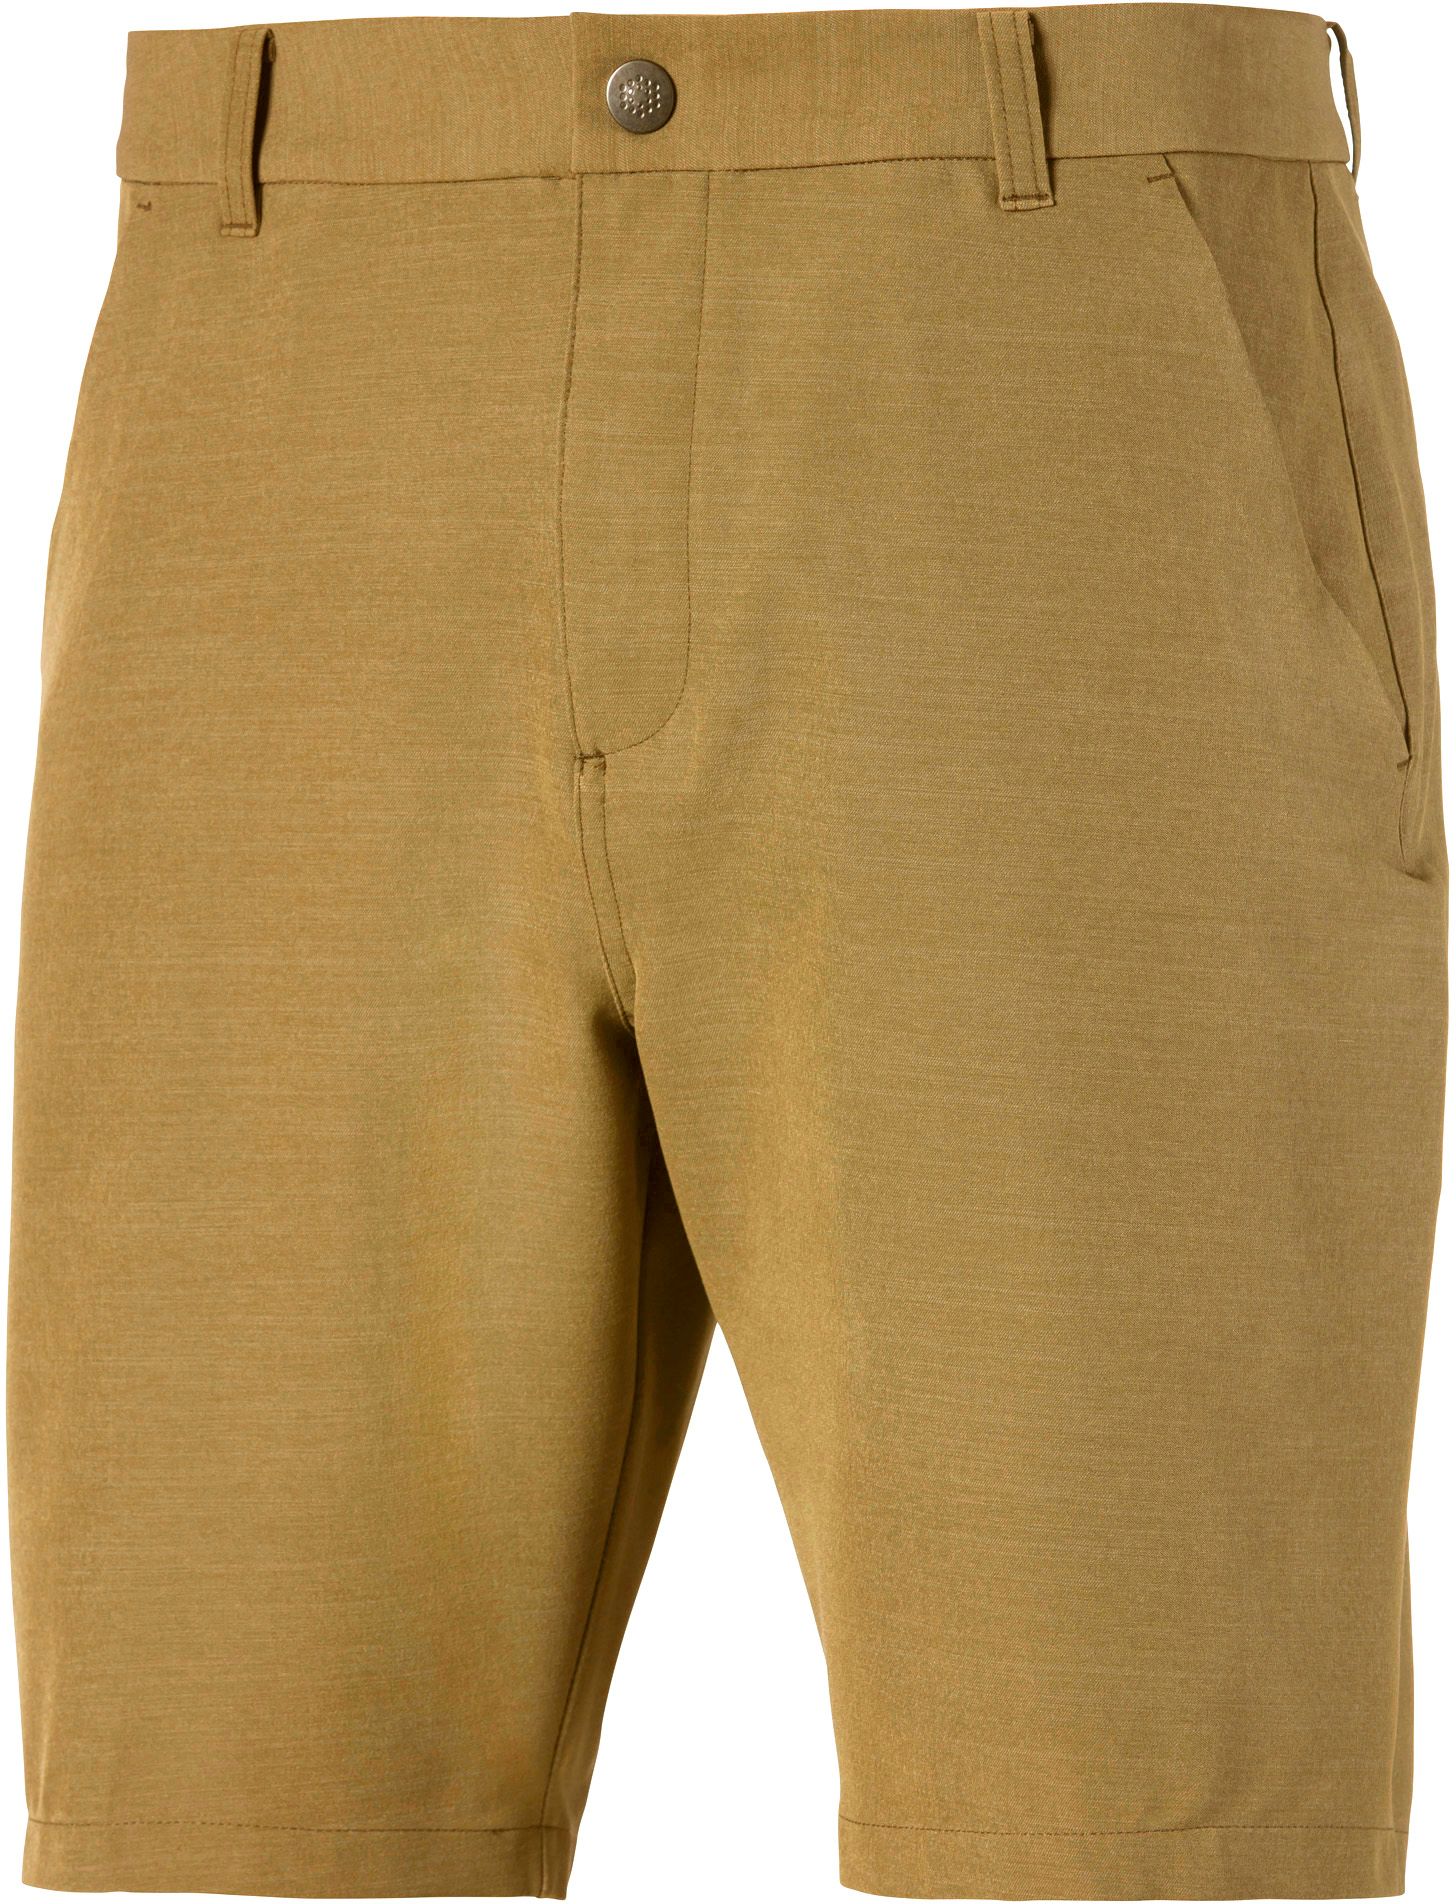 PUMA Golf Shorts | DICK'S Sporting Goods